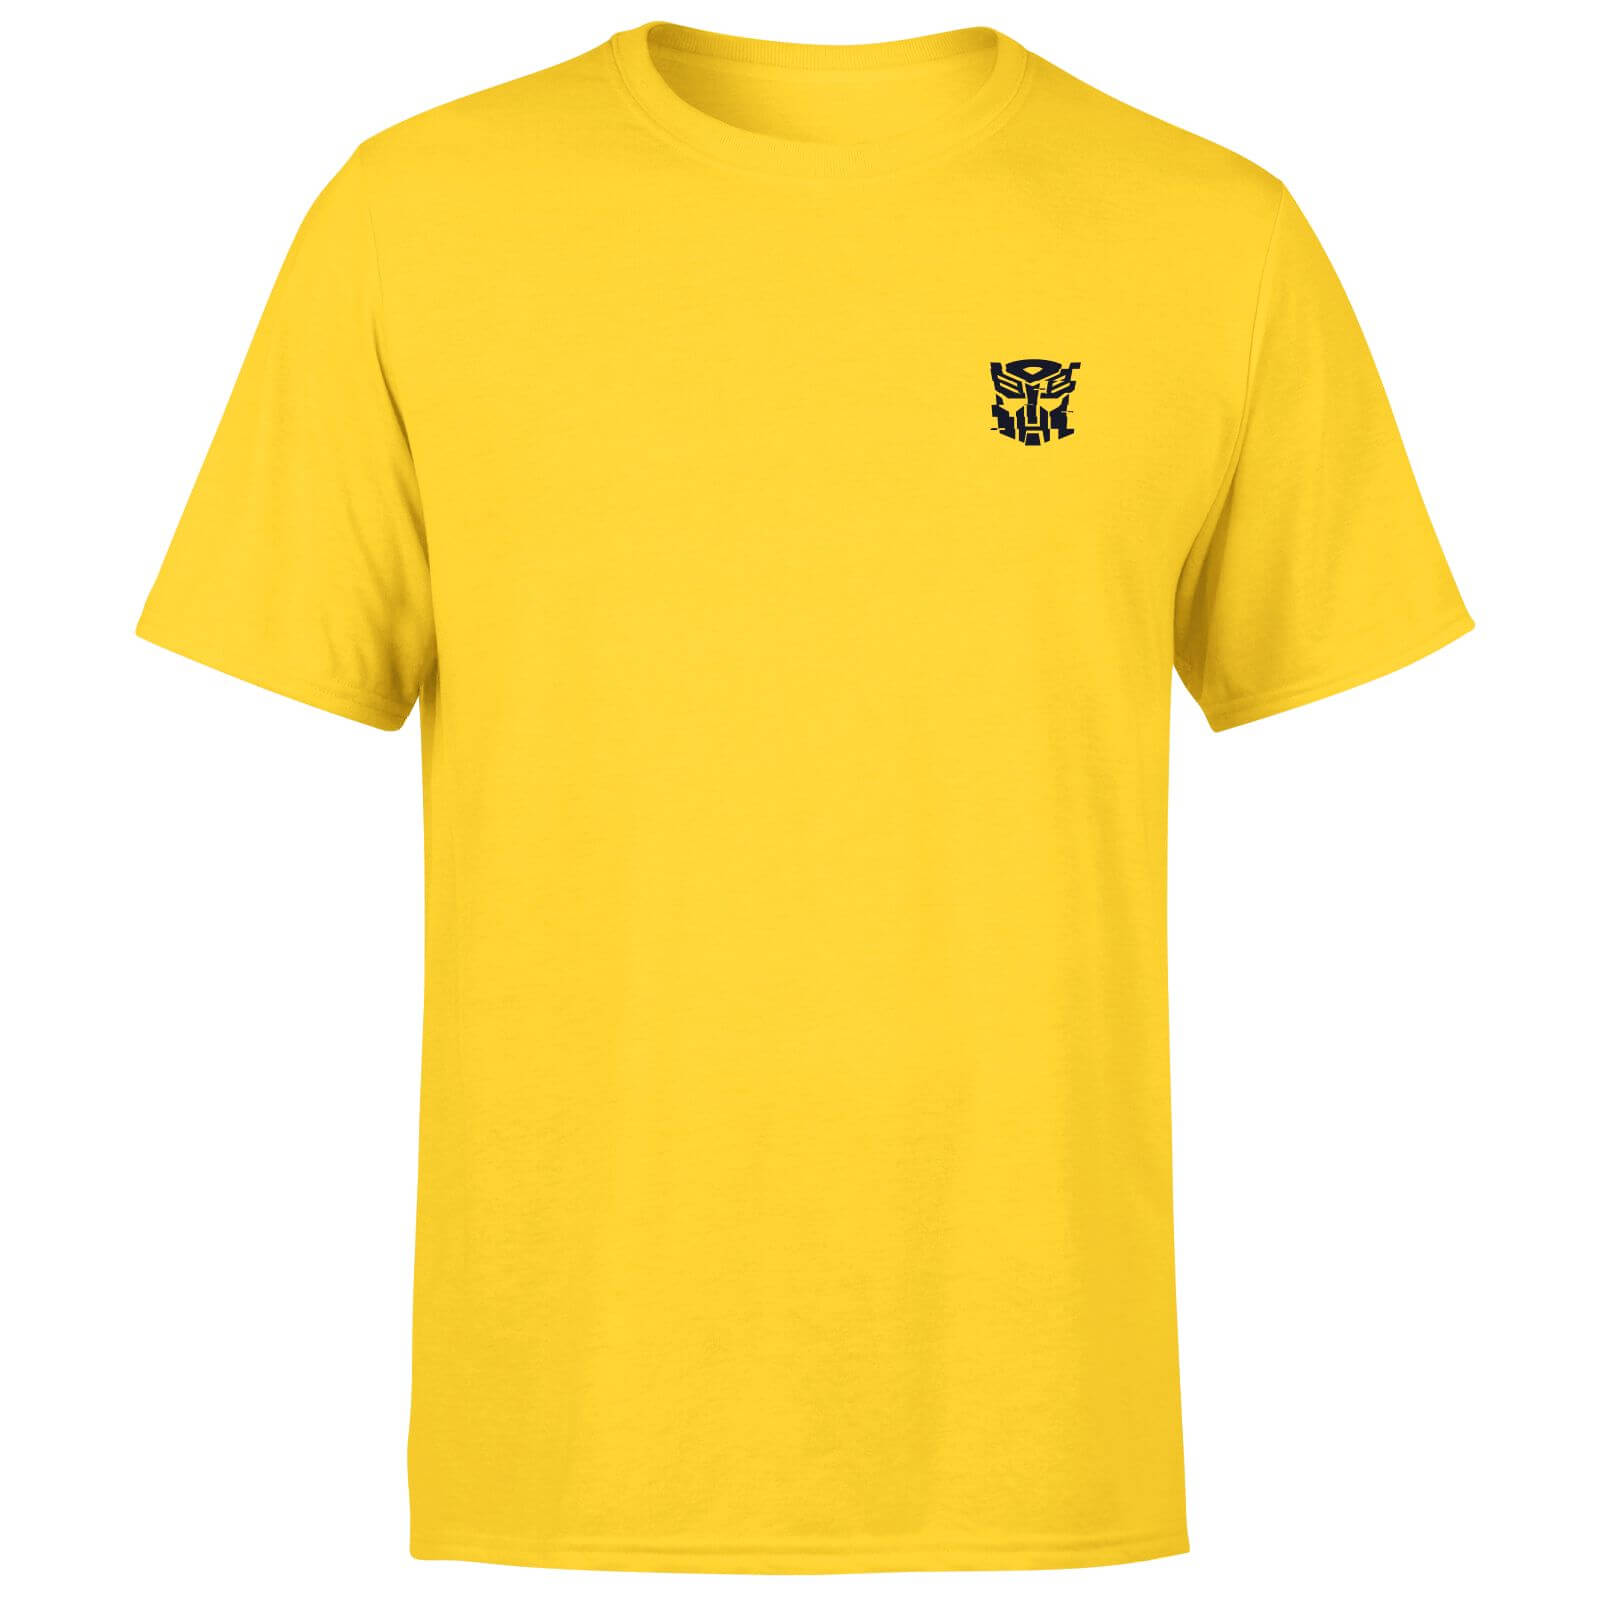 Transformers Bumble Bee Unisex T-Shirt - Yellow - S - Yellow